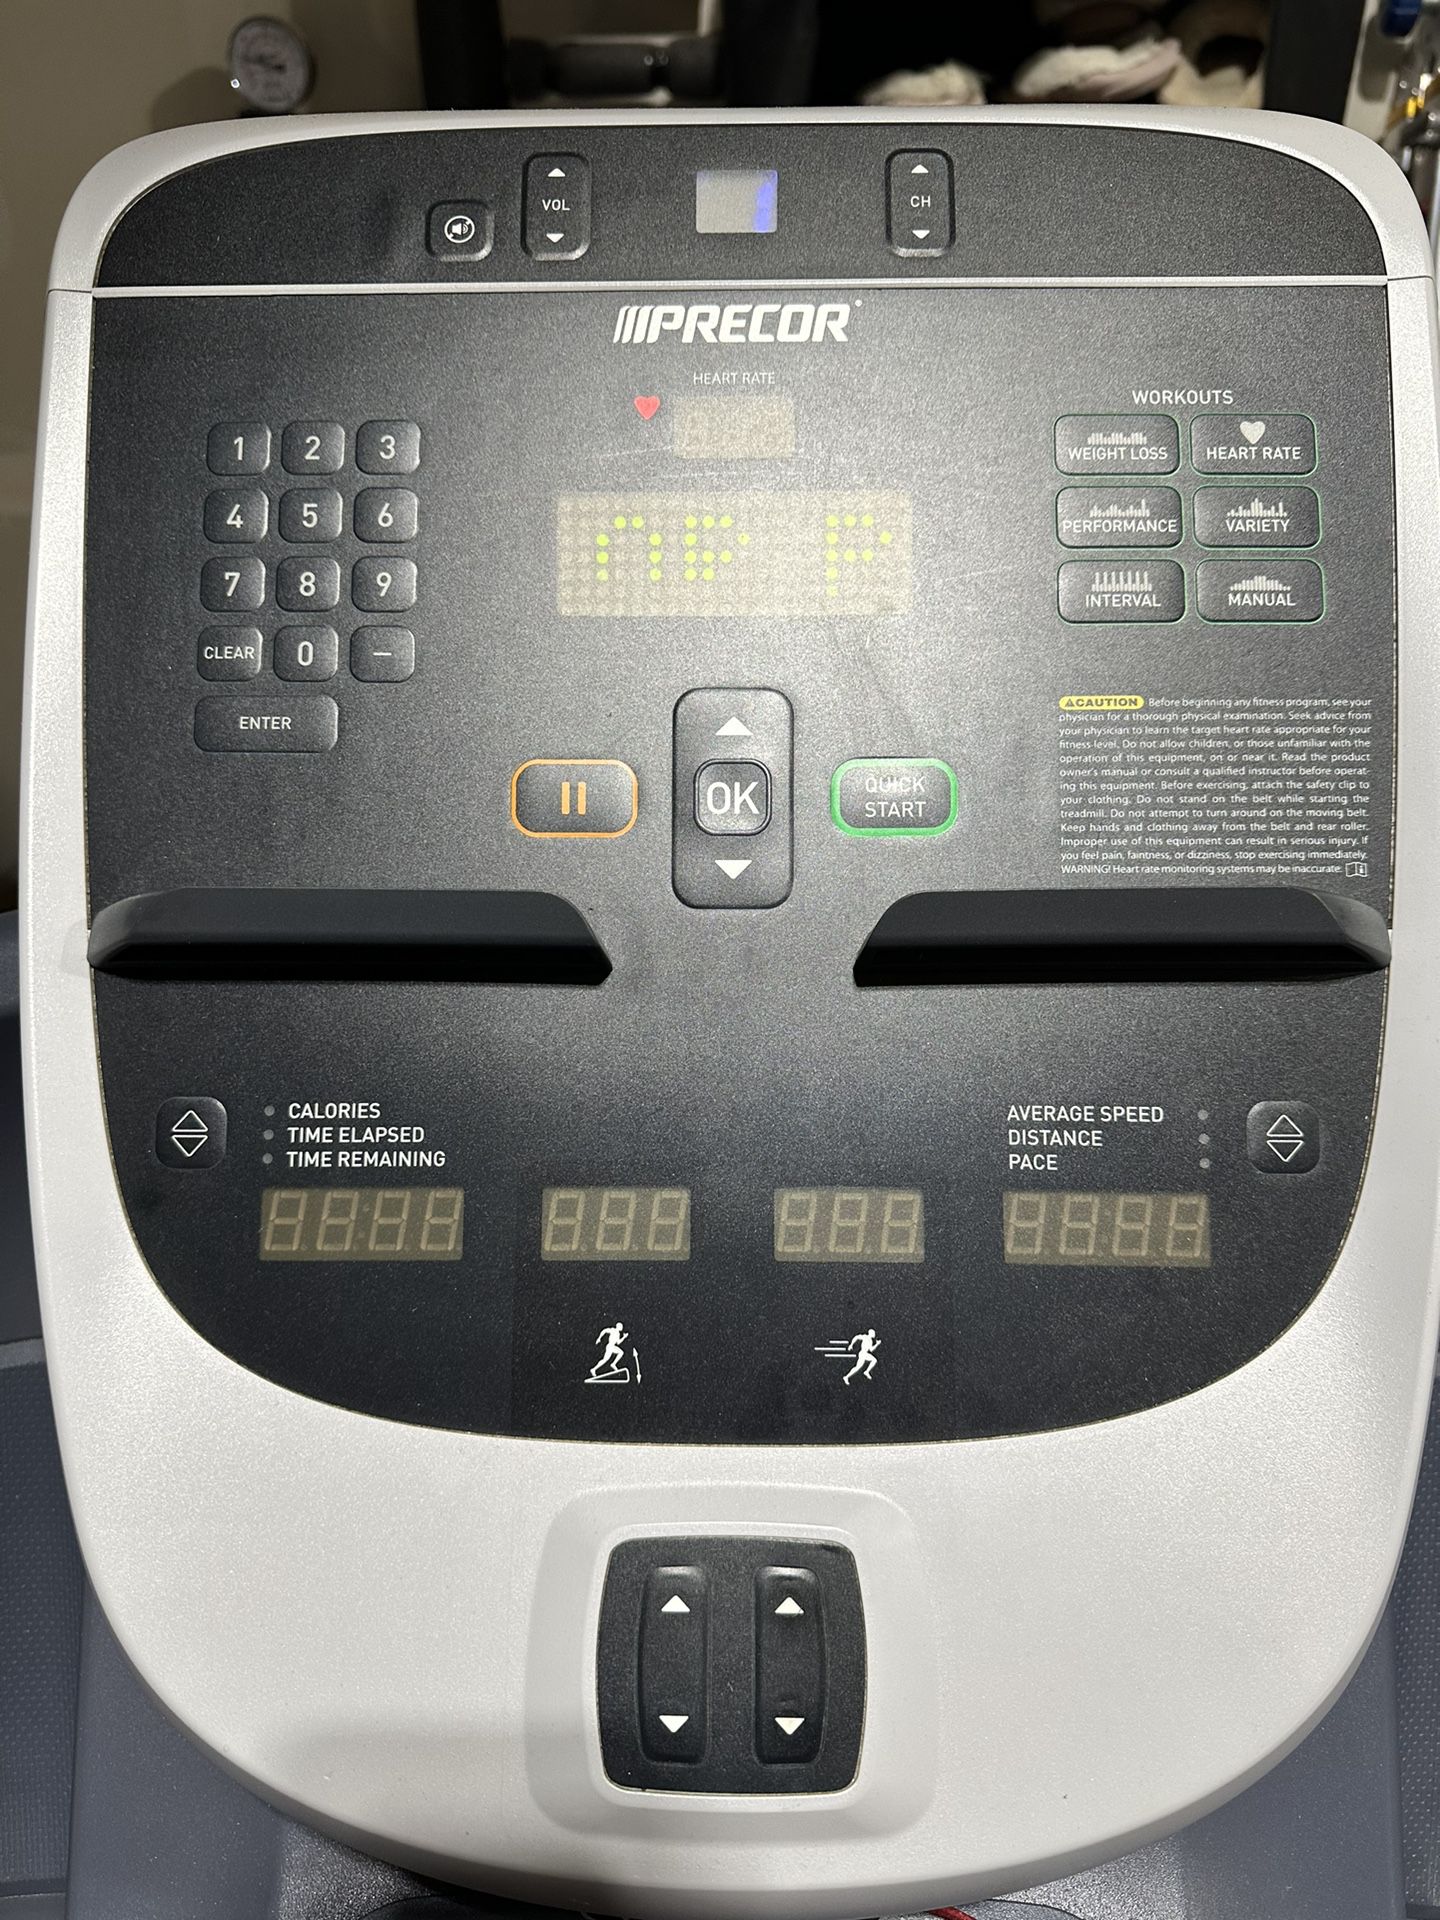 Precor TRM 835 Commercial Series Treadmill with P30 Console